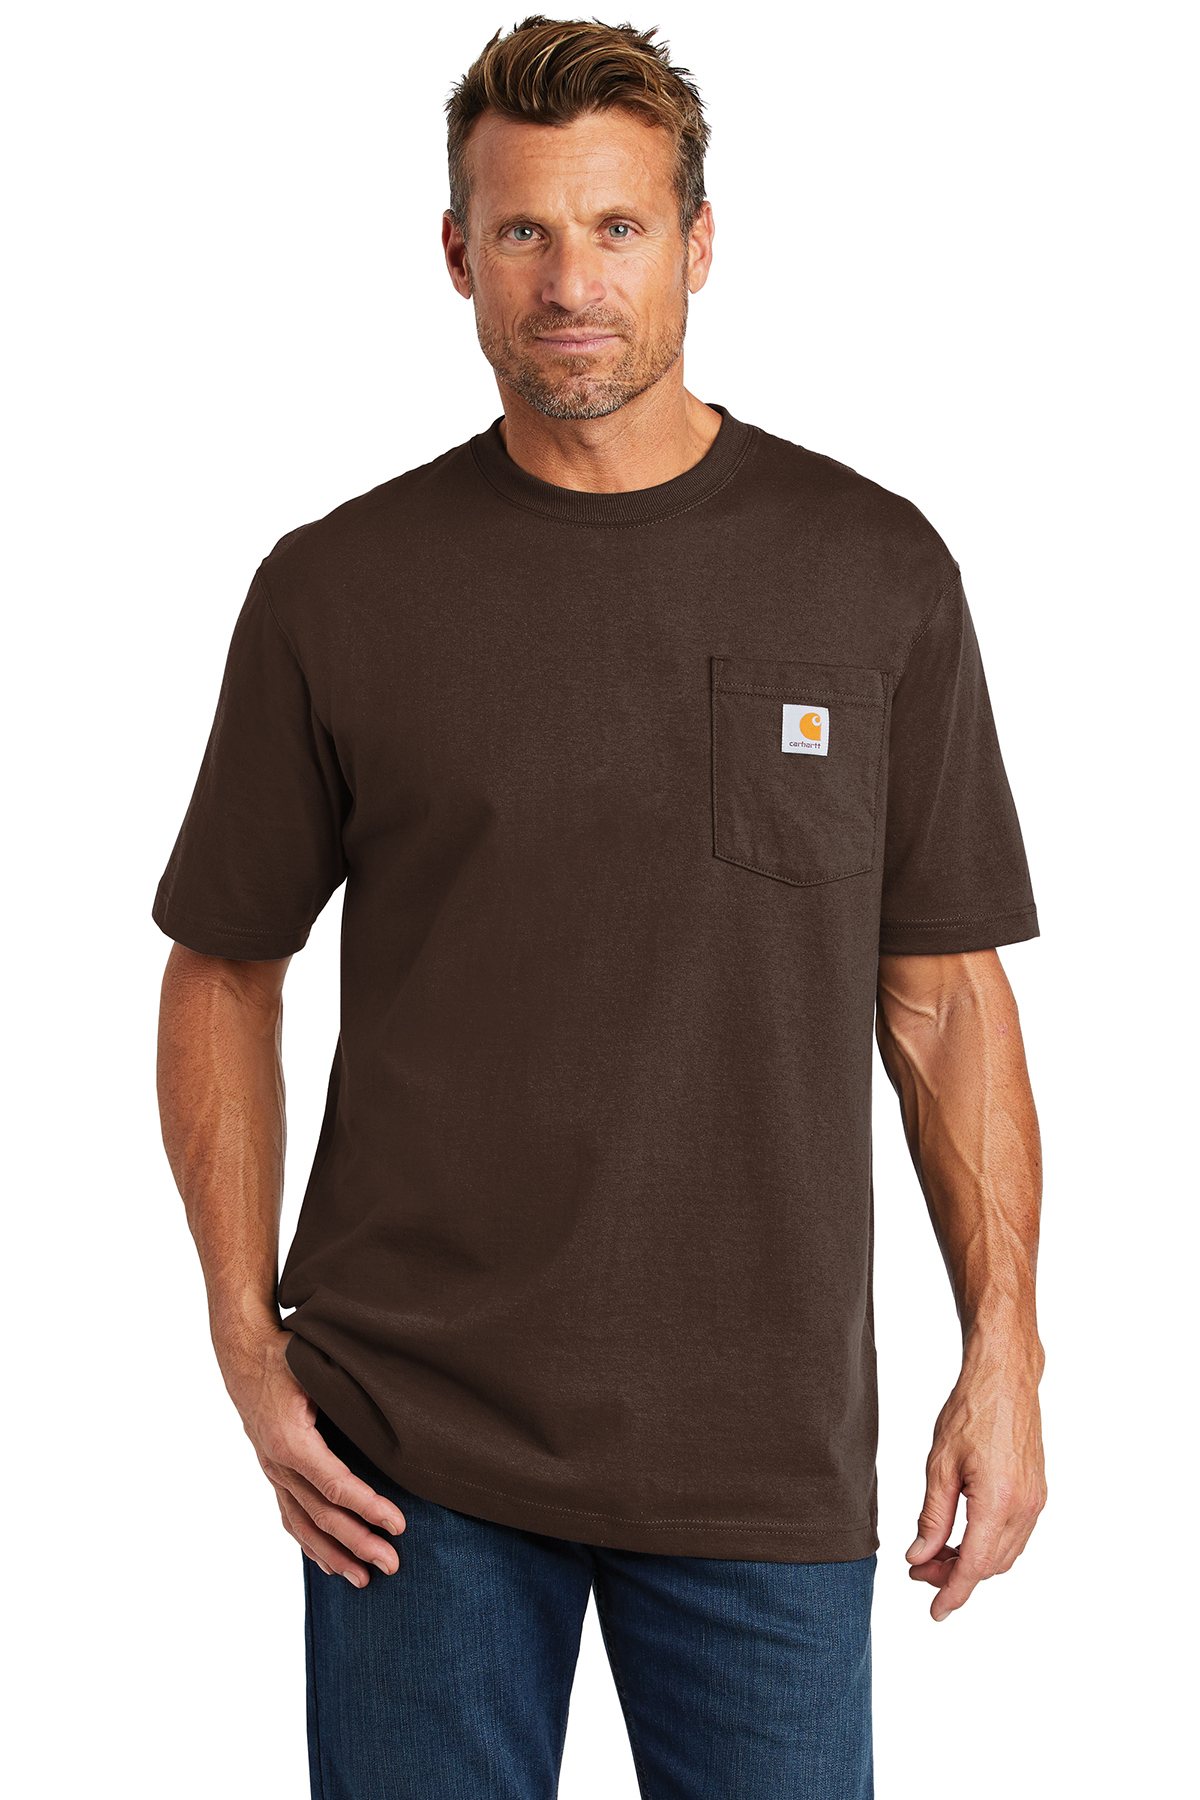 T-Shirt Sleeve Carhartt Pocket | Short SanMar Workwear Product |